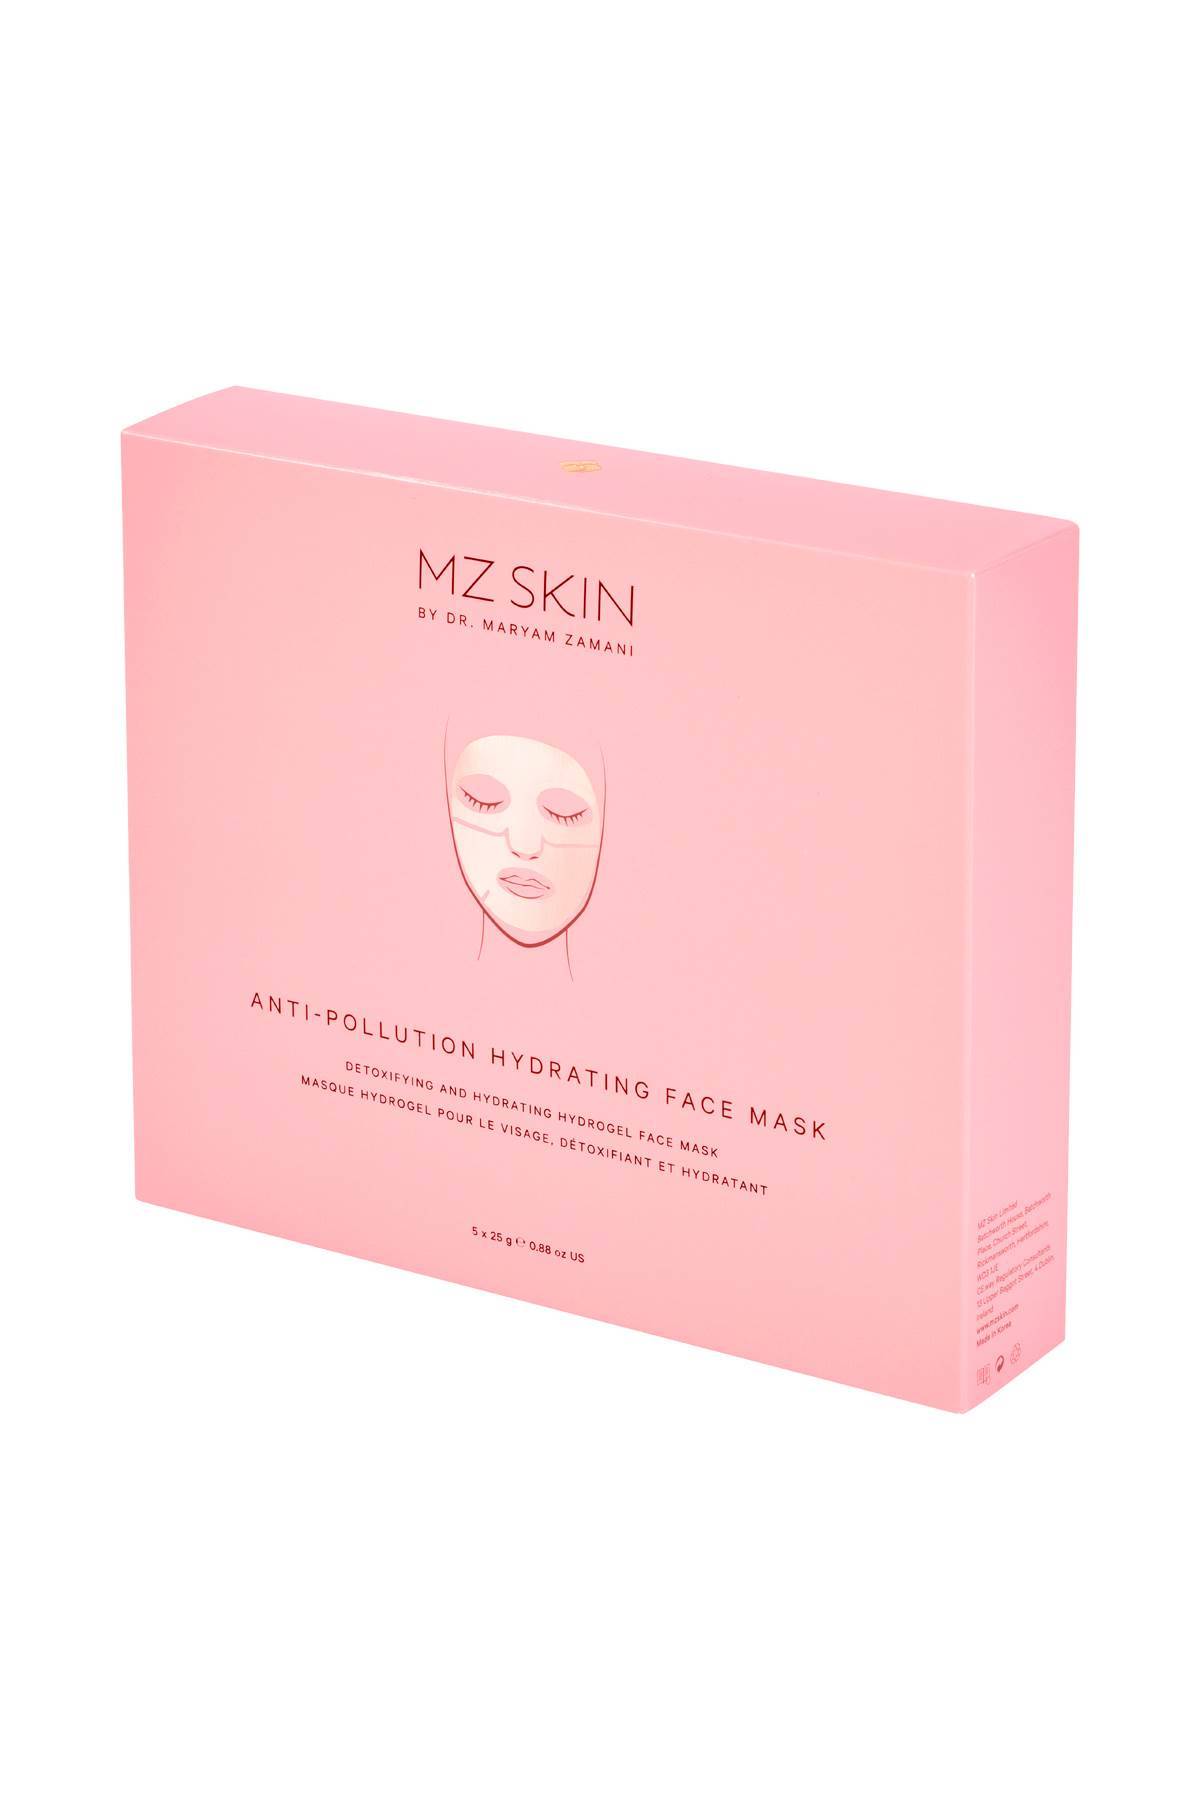 Mz Skin MZ SKIN anti-pollution hydrating face mask